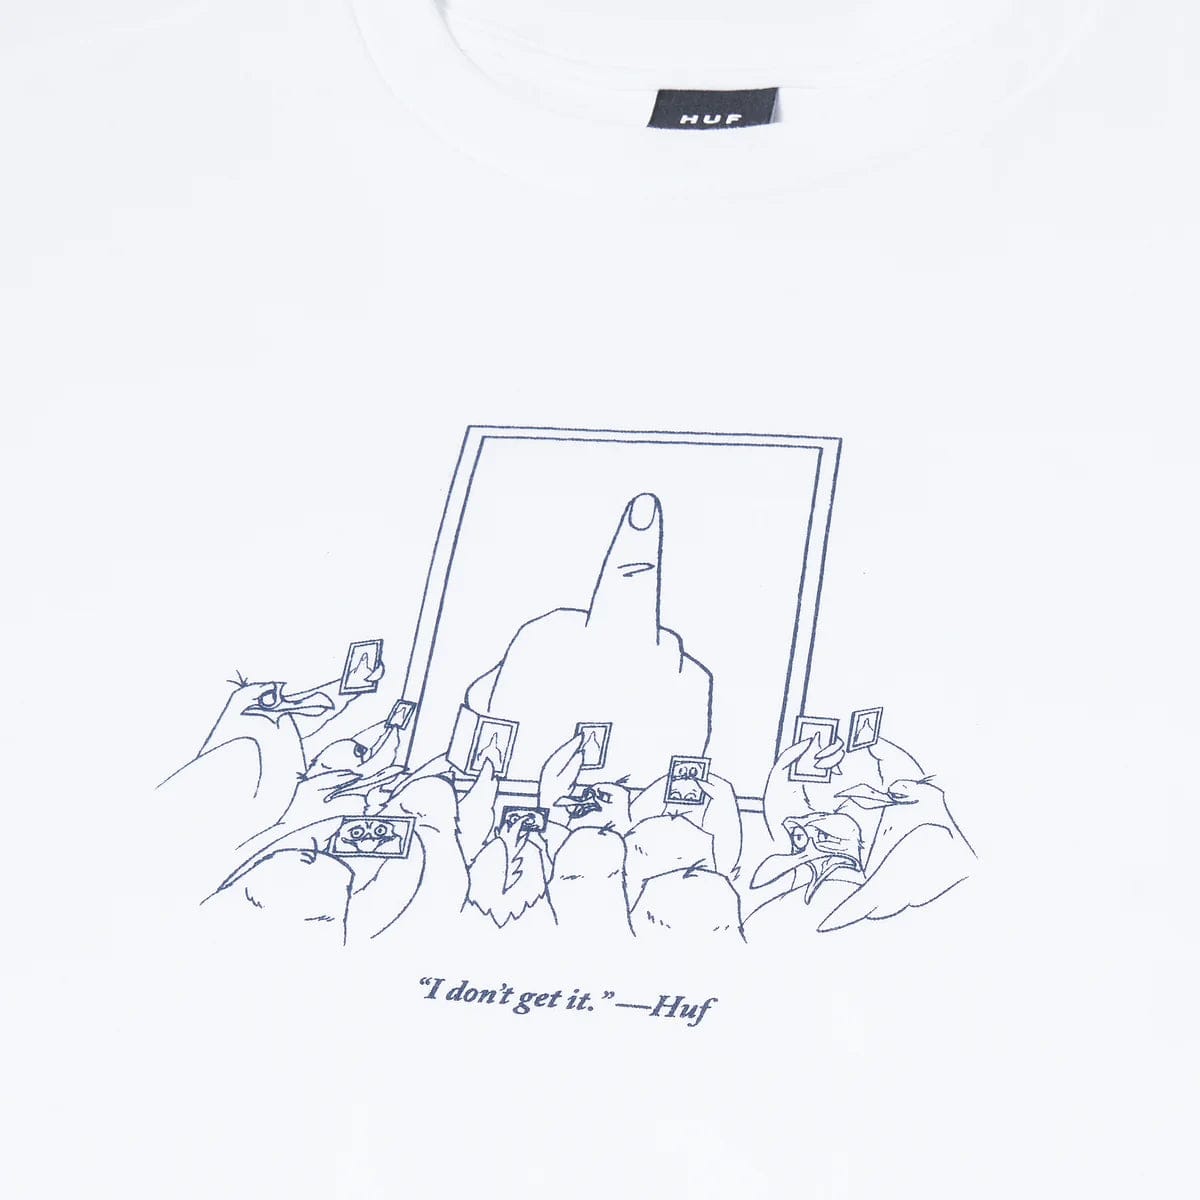 HUF Favorite Artist Tee - White T-Shirts